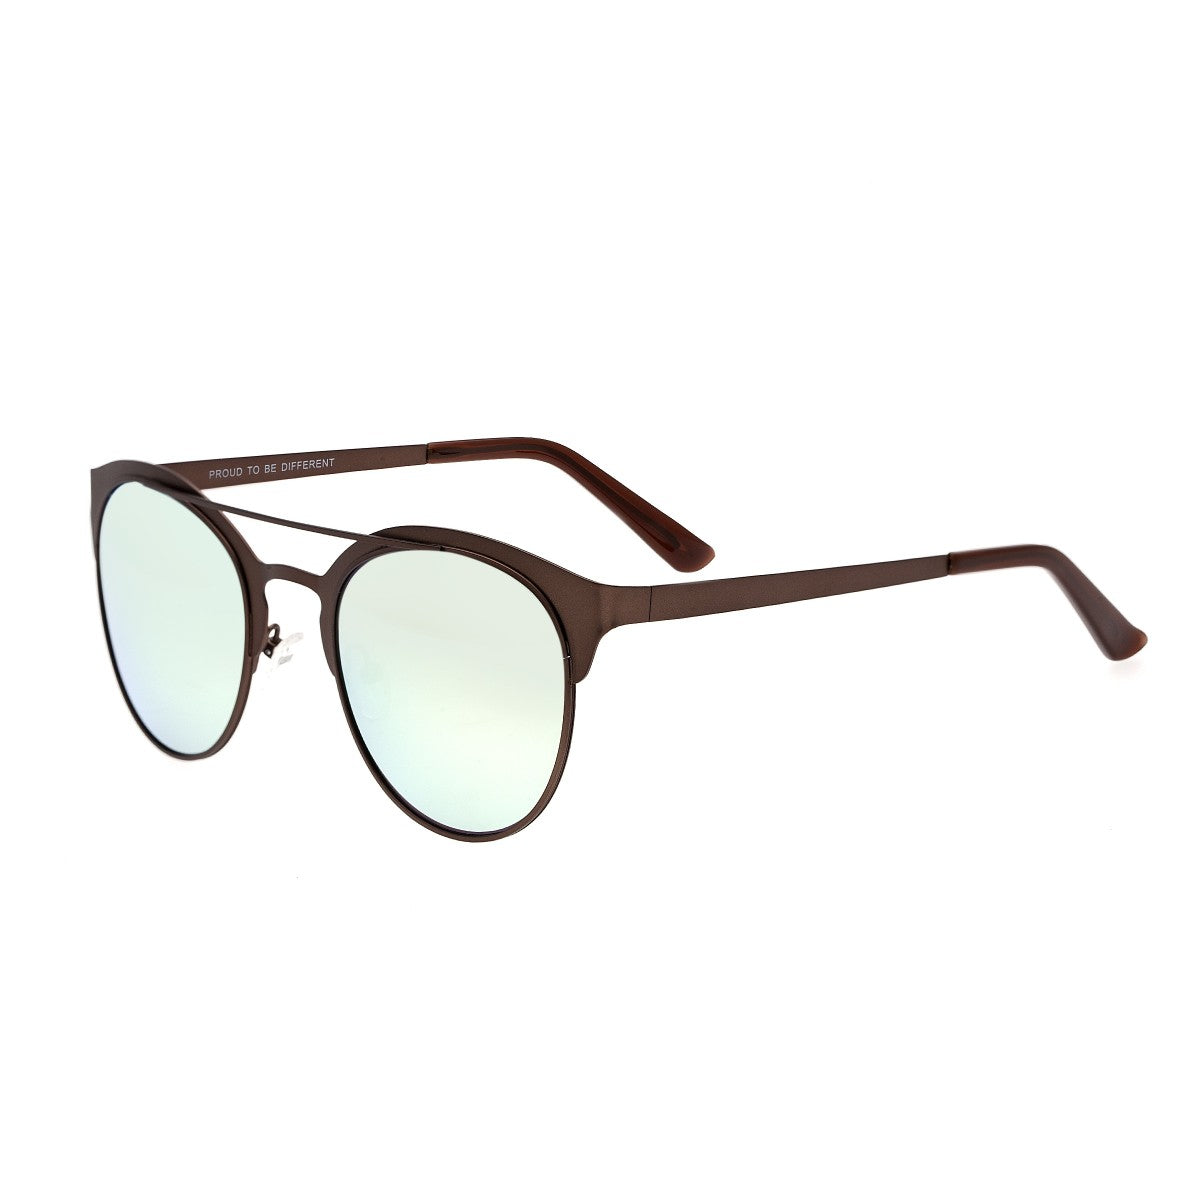 Breed Phoenix Titanium Polarized Sunglasses - Brown/Celeste - BSG036BN